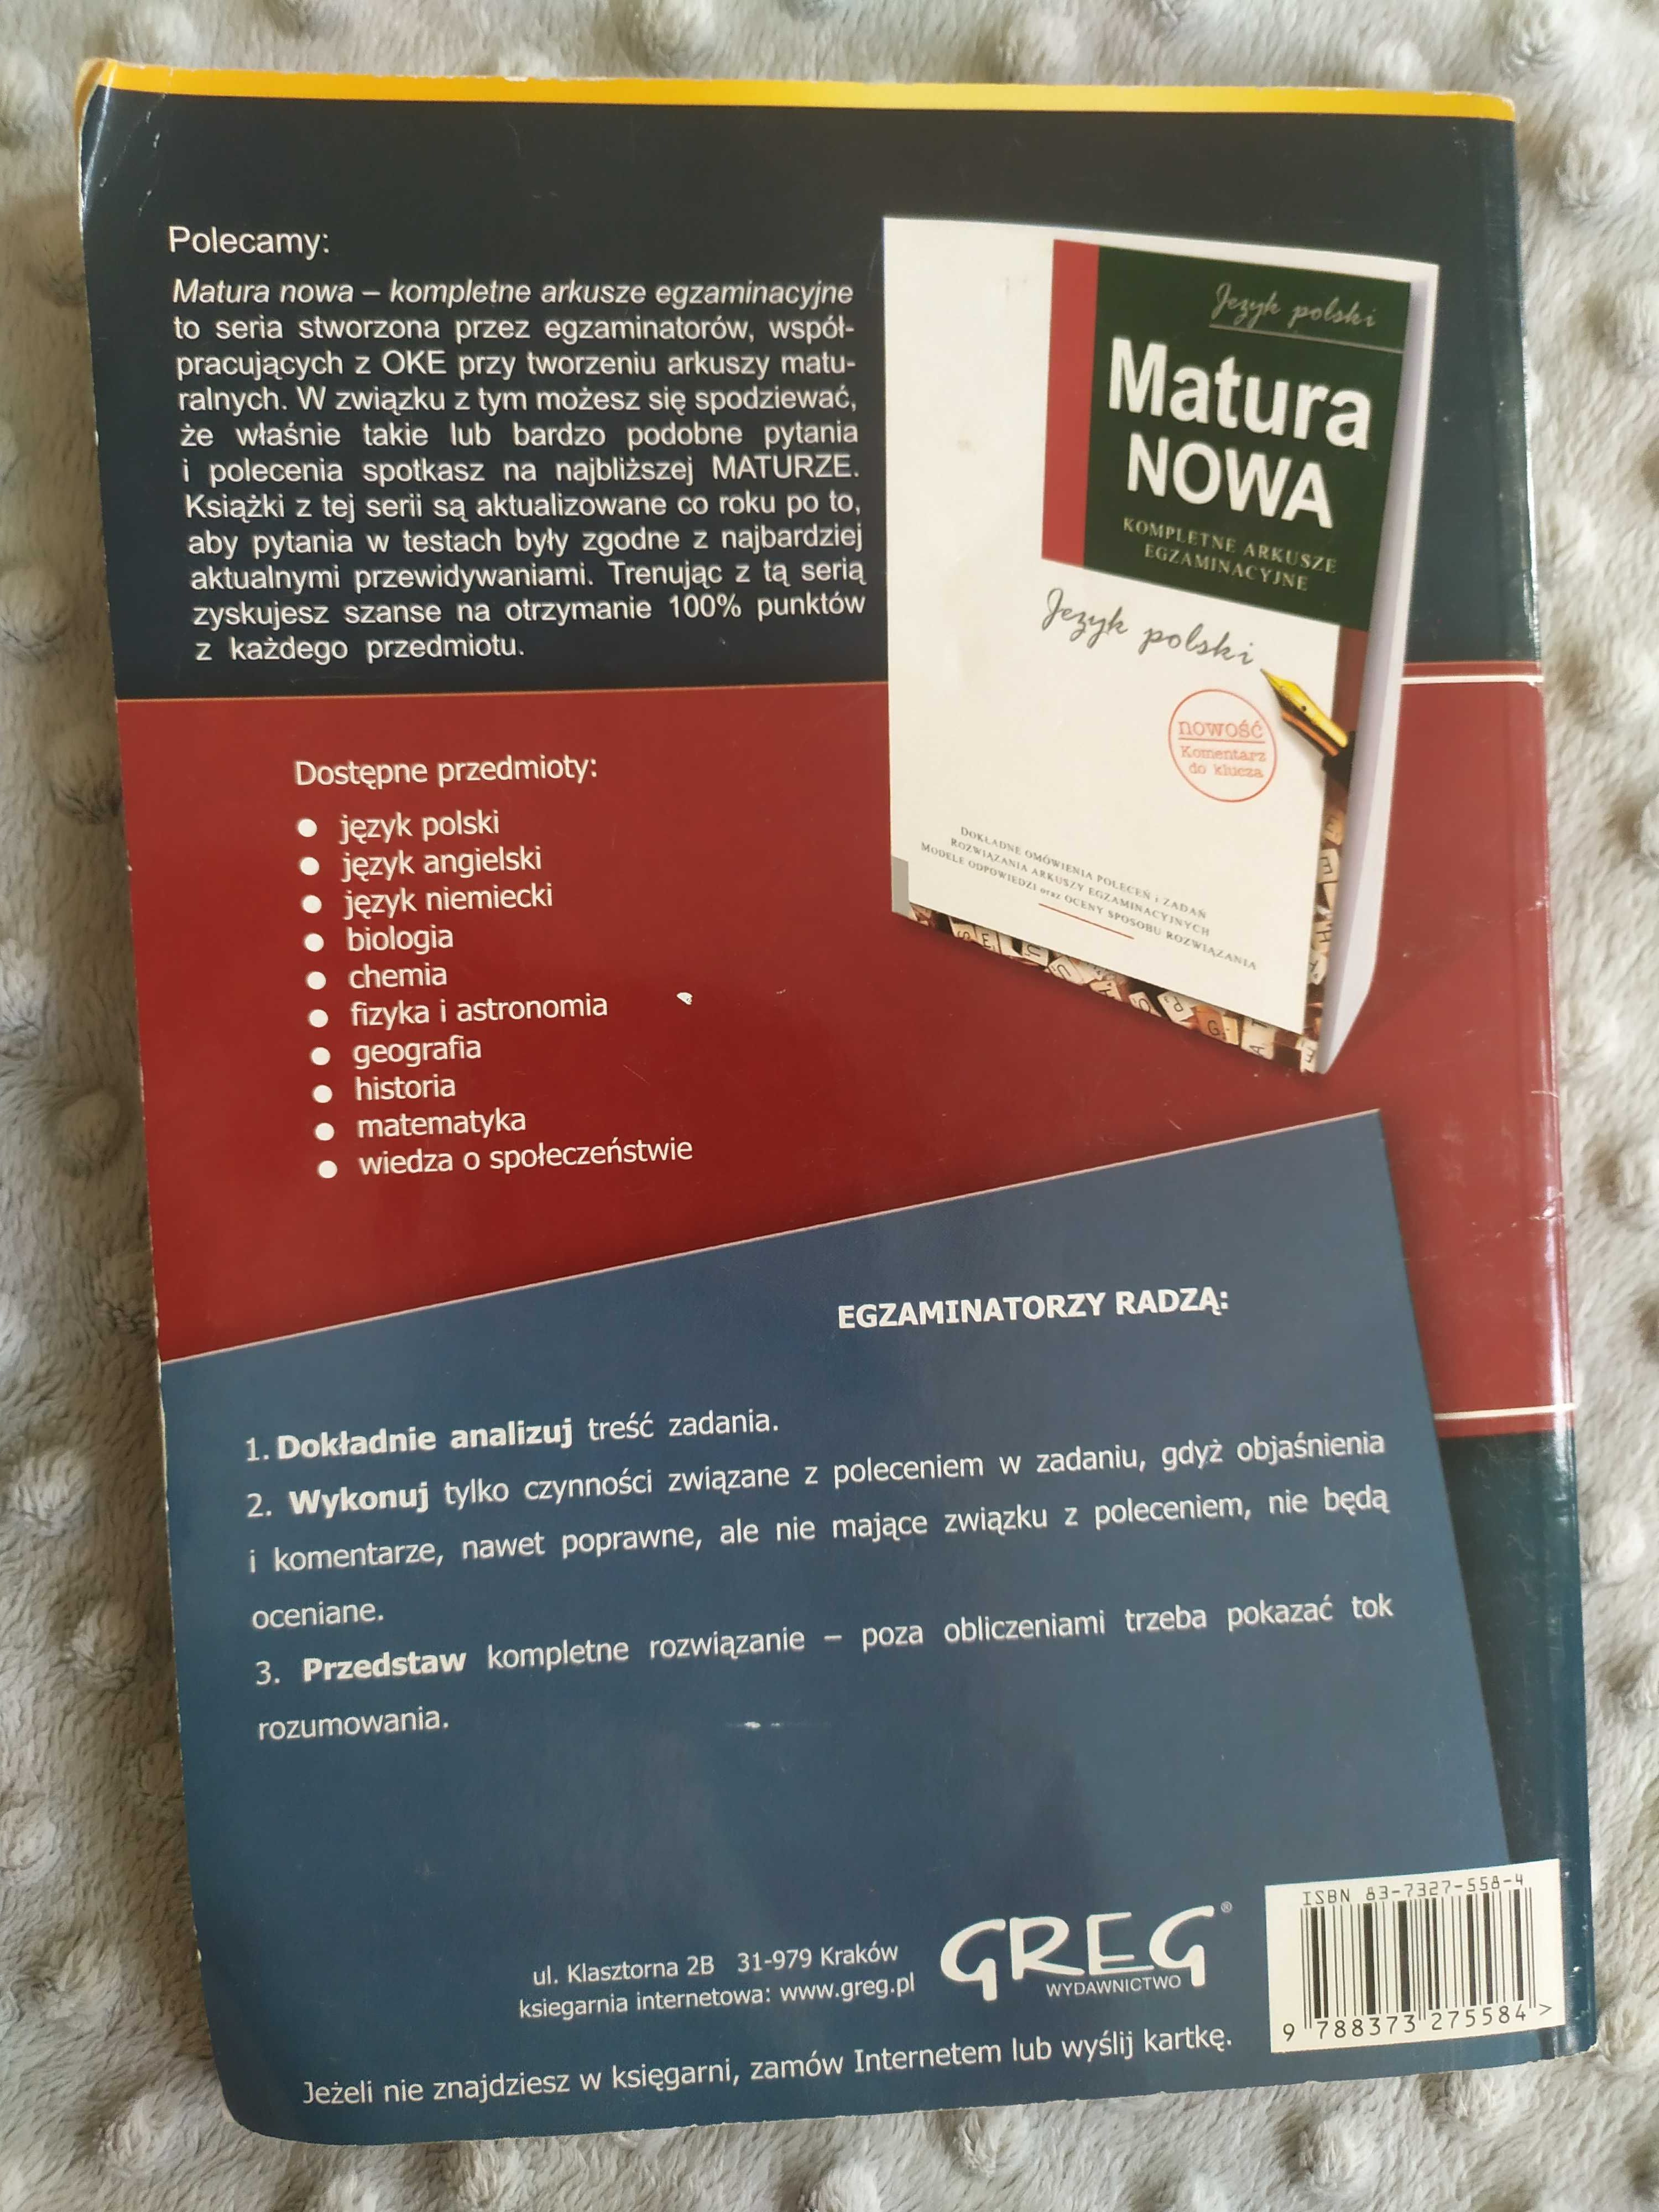 Matemtyka Matura 2005 książka oryginalne arkusze egzaminacyjne